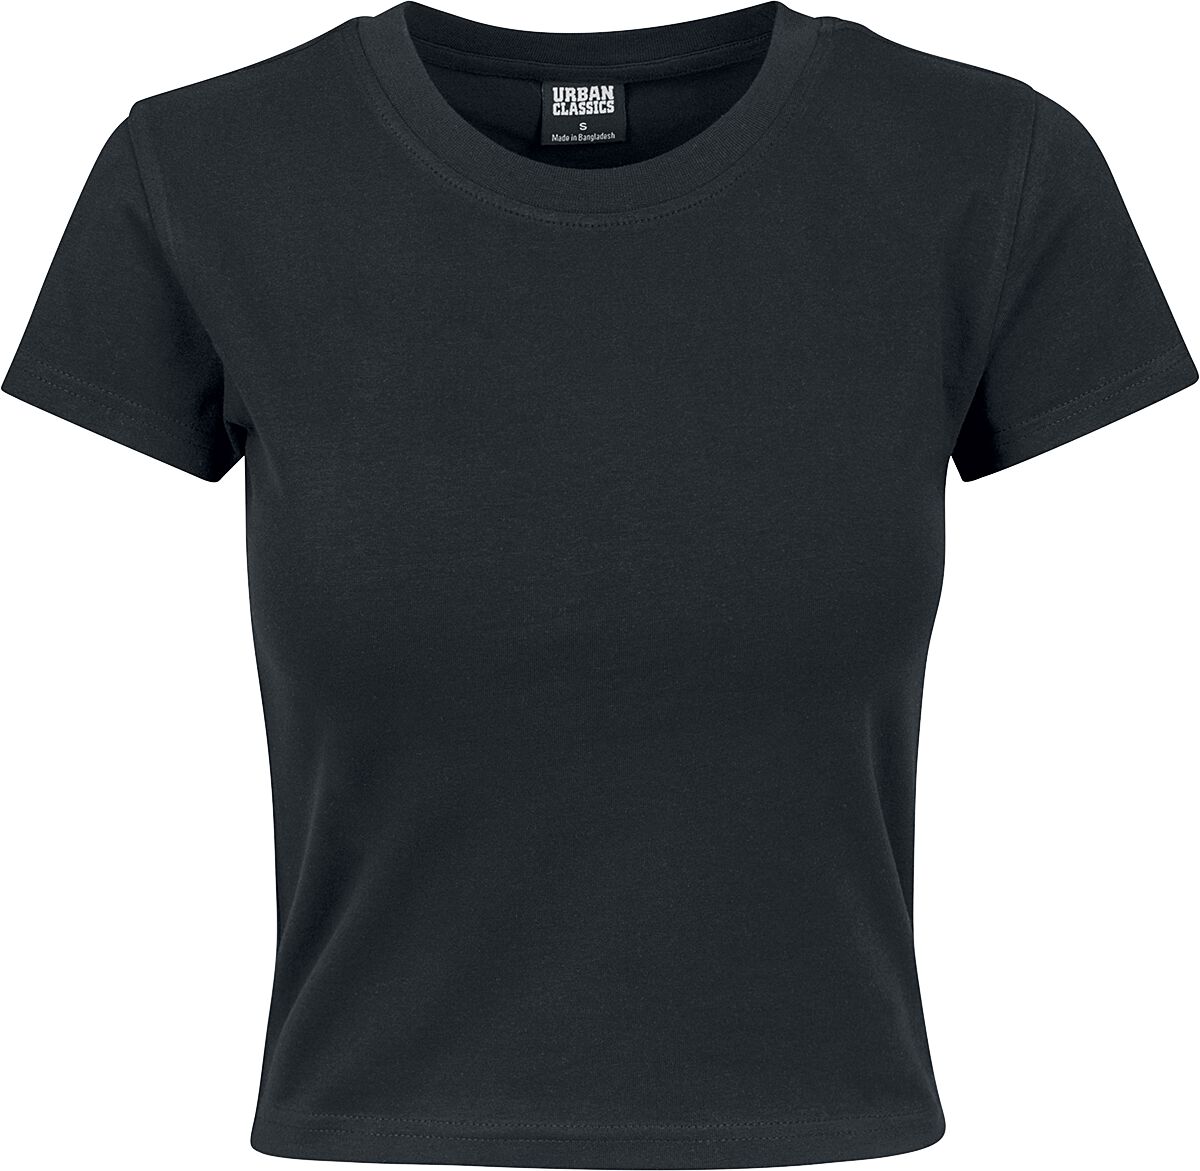 Urban Classics Ladies Stretch Jersey Cropped Tee T-Shirt schwarz in L